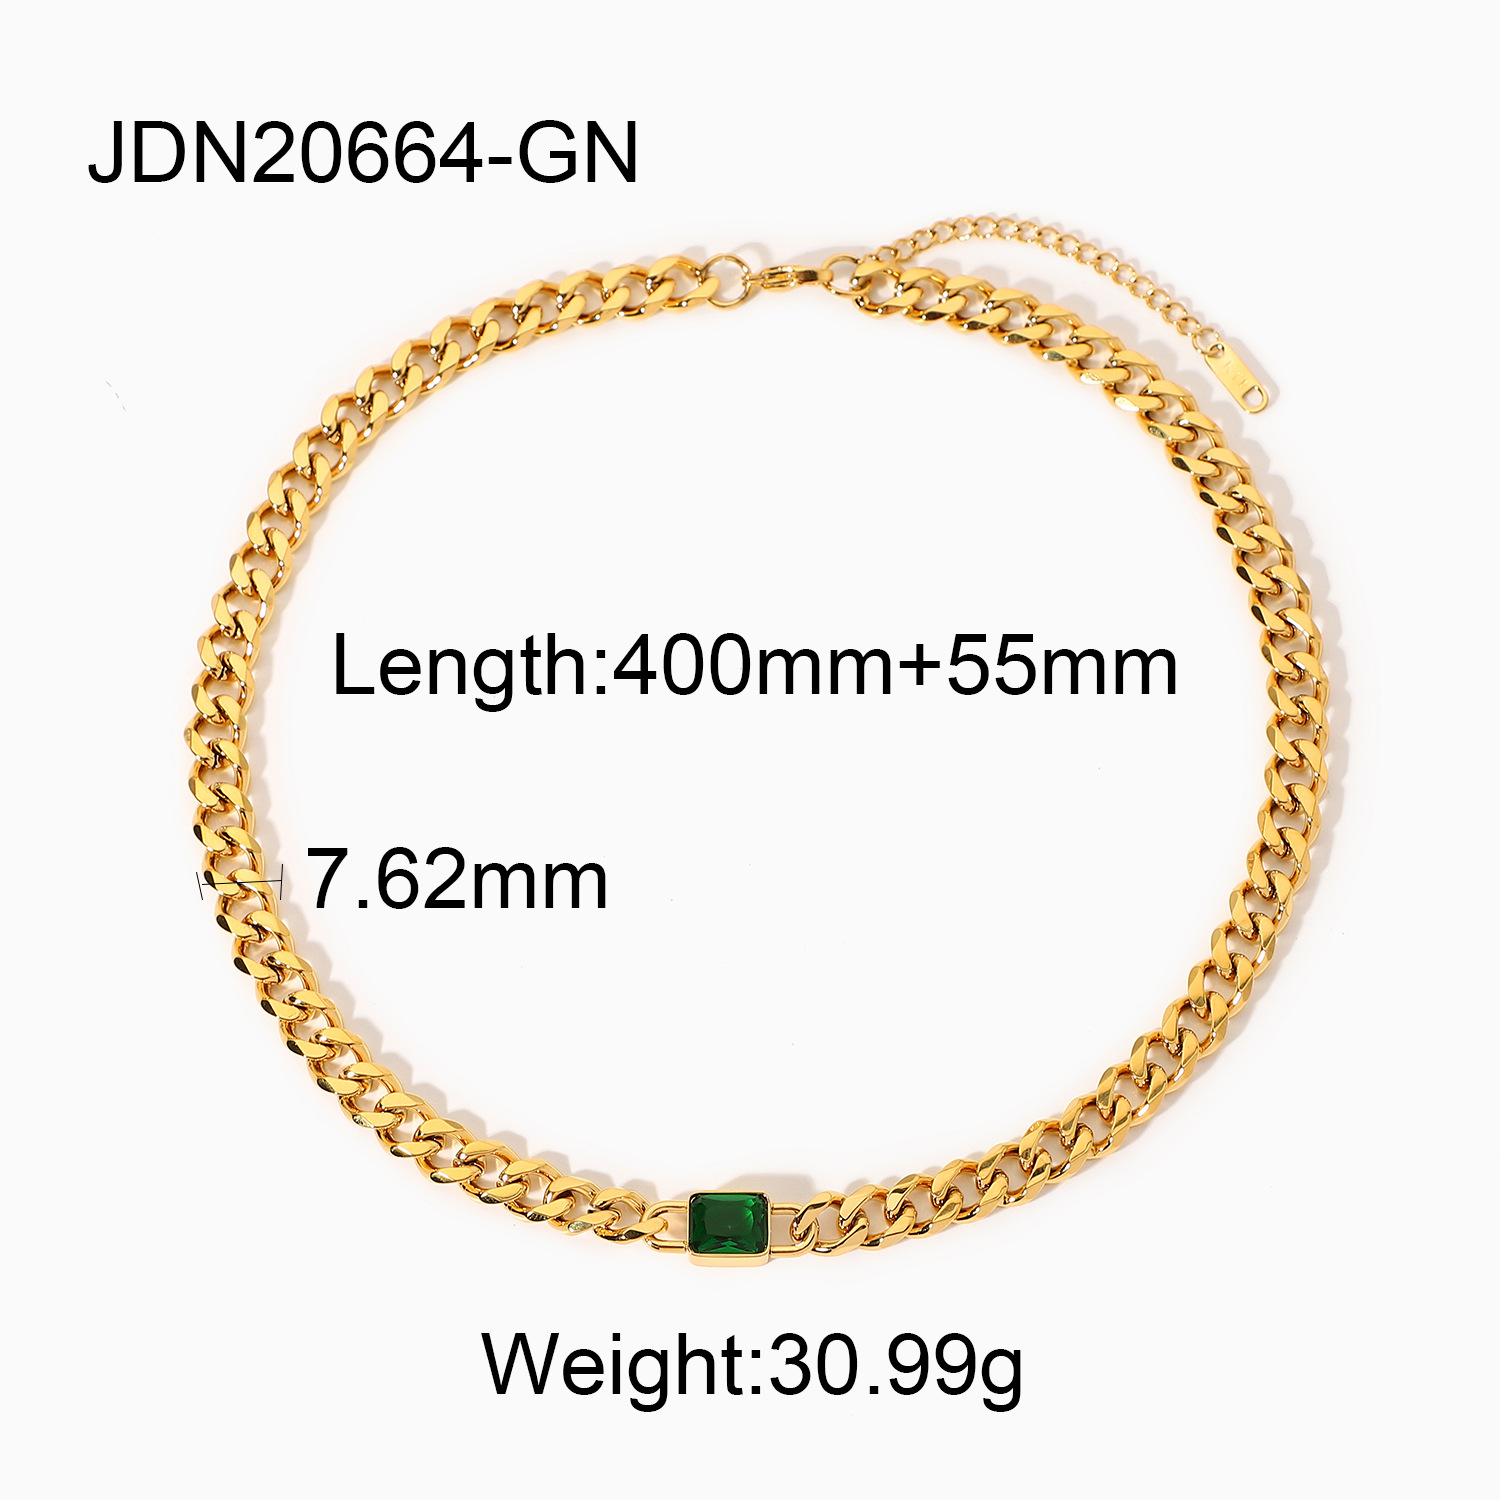 JDN20664-GN